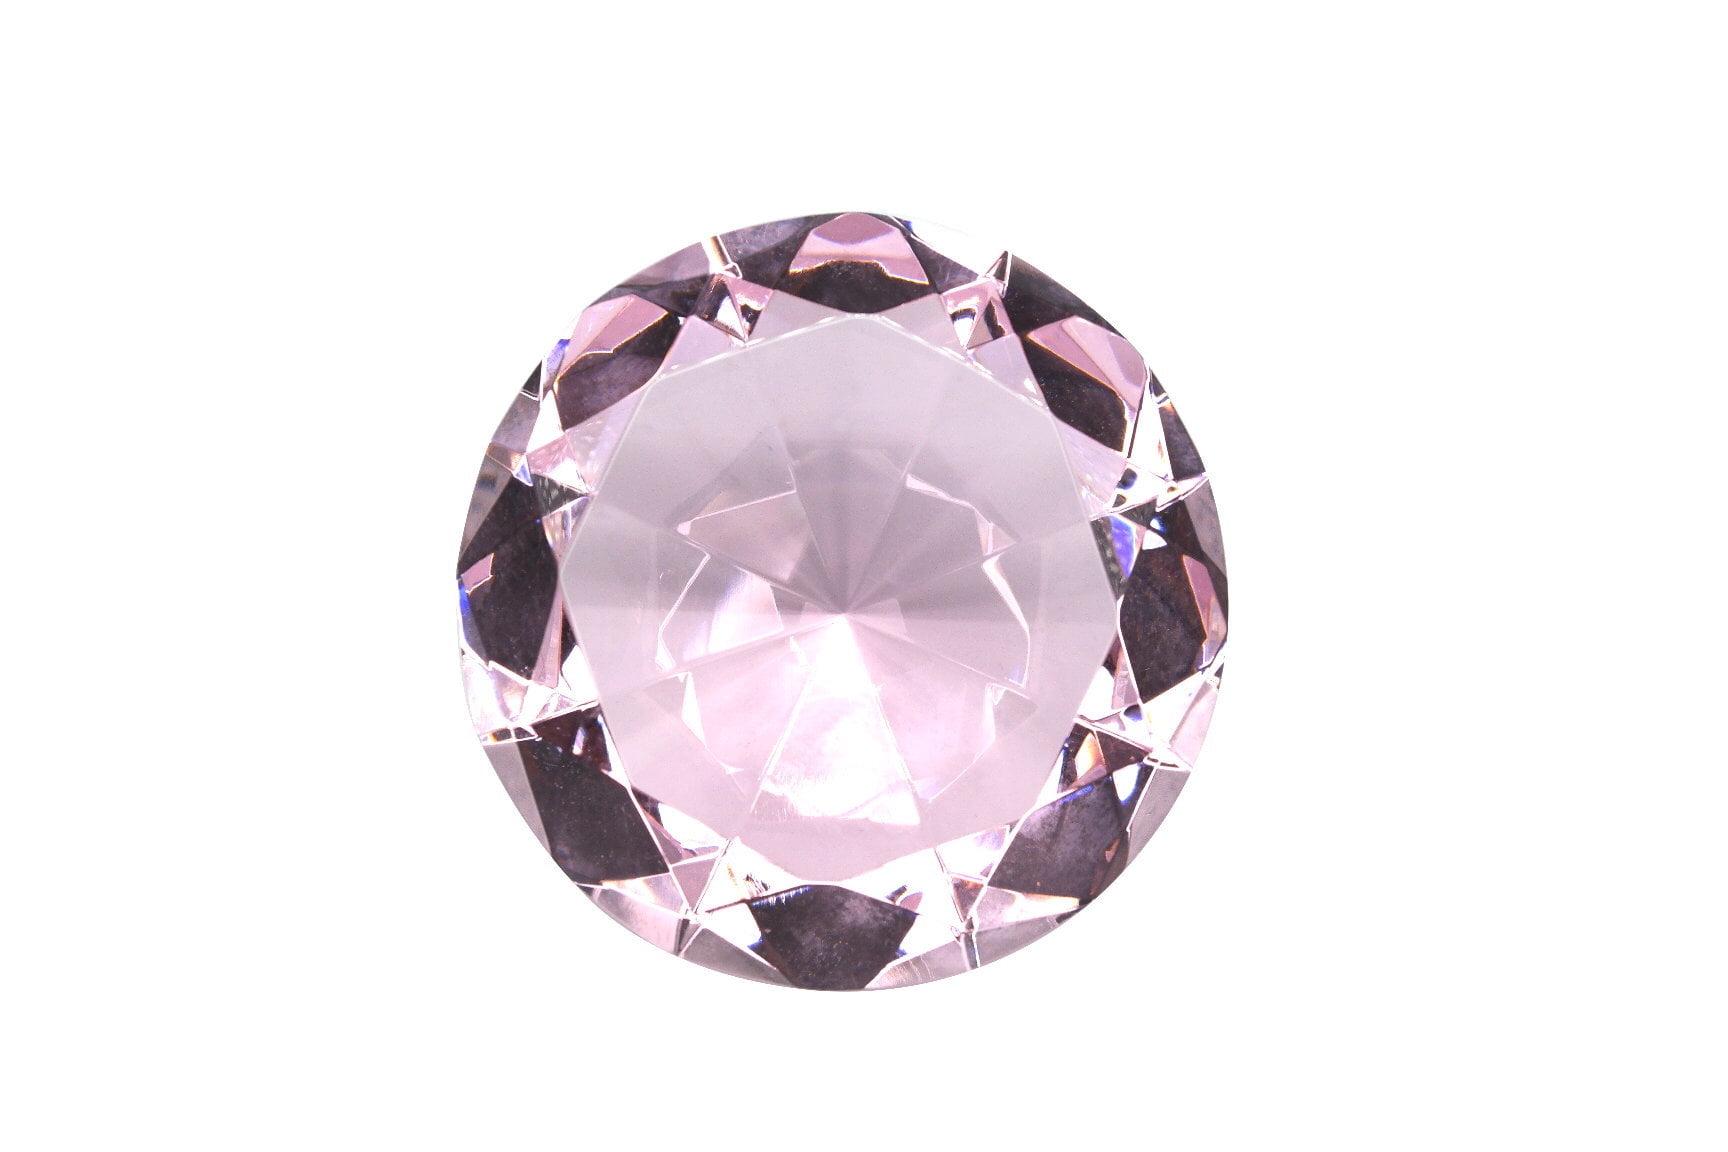 Tripact Diamond Shaped Jewel Crystal 80 mm Diameter Paperweight 